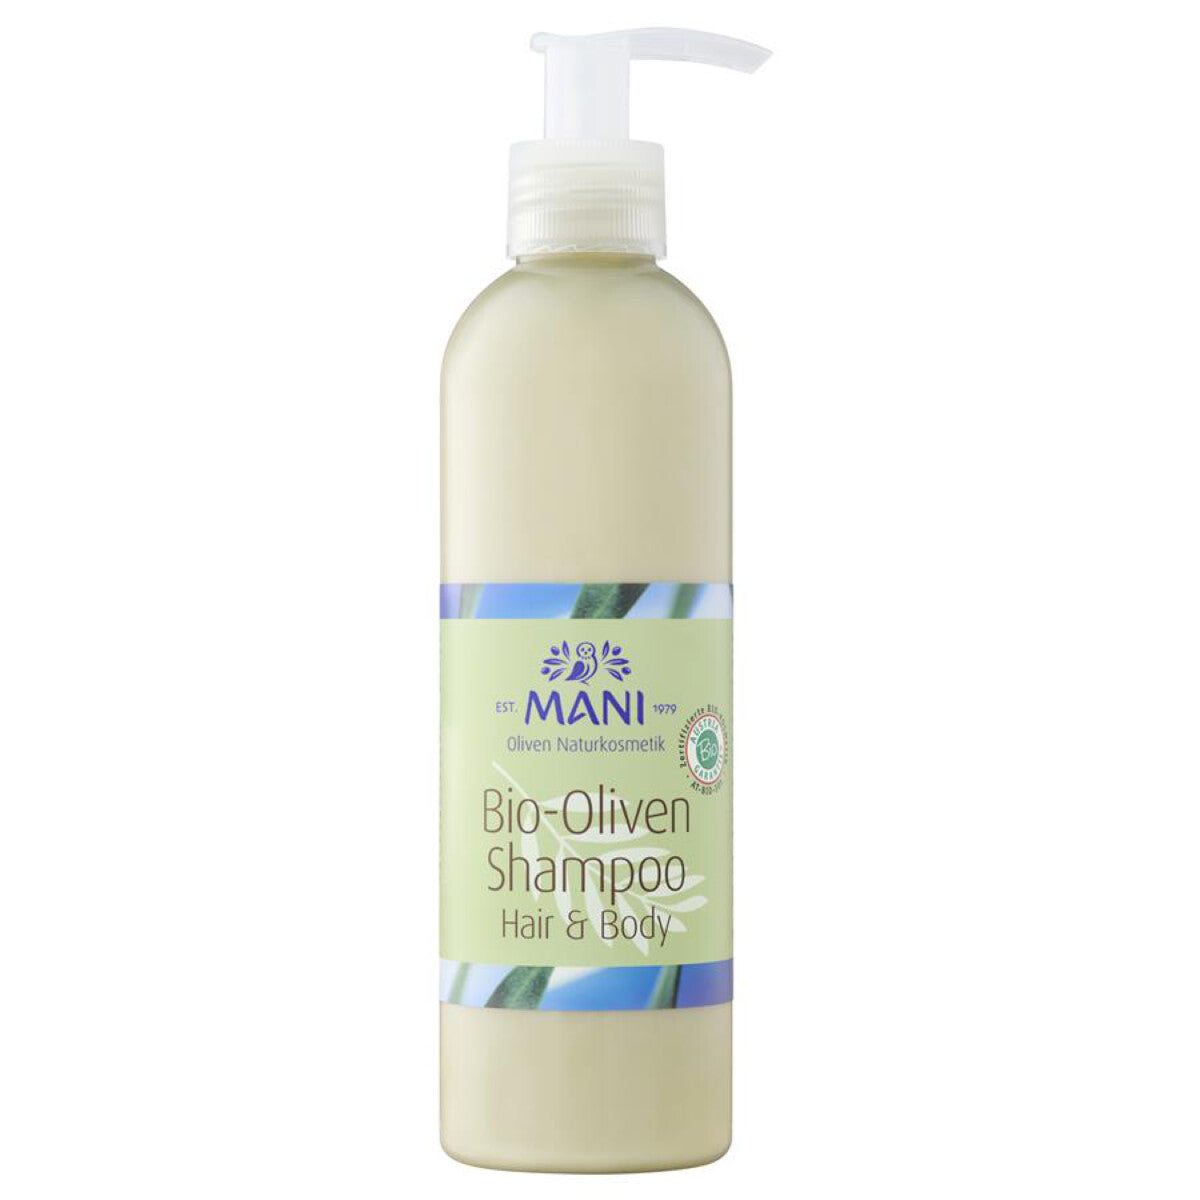 MANI BLÄUEL Oliven Shampoo Hair & Body - 250 ml